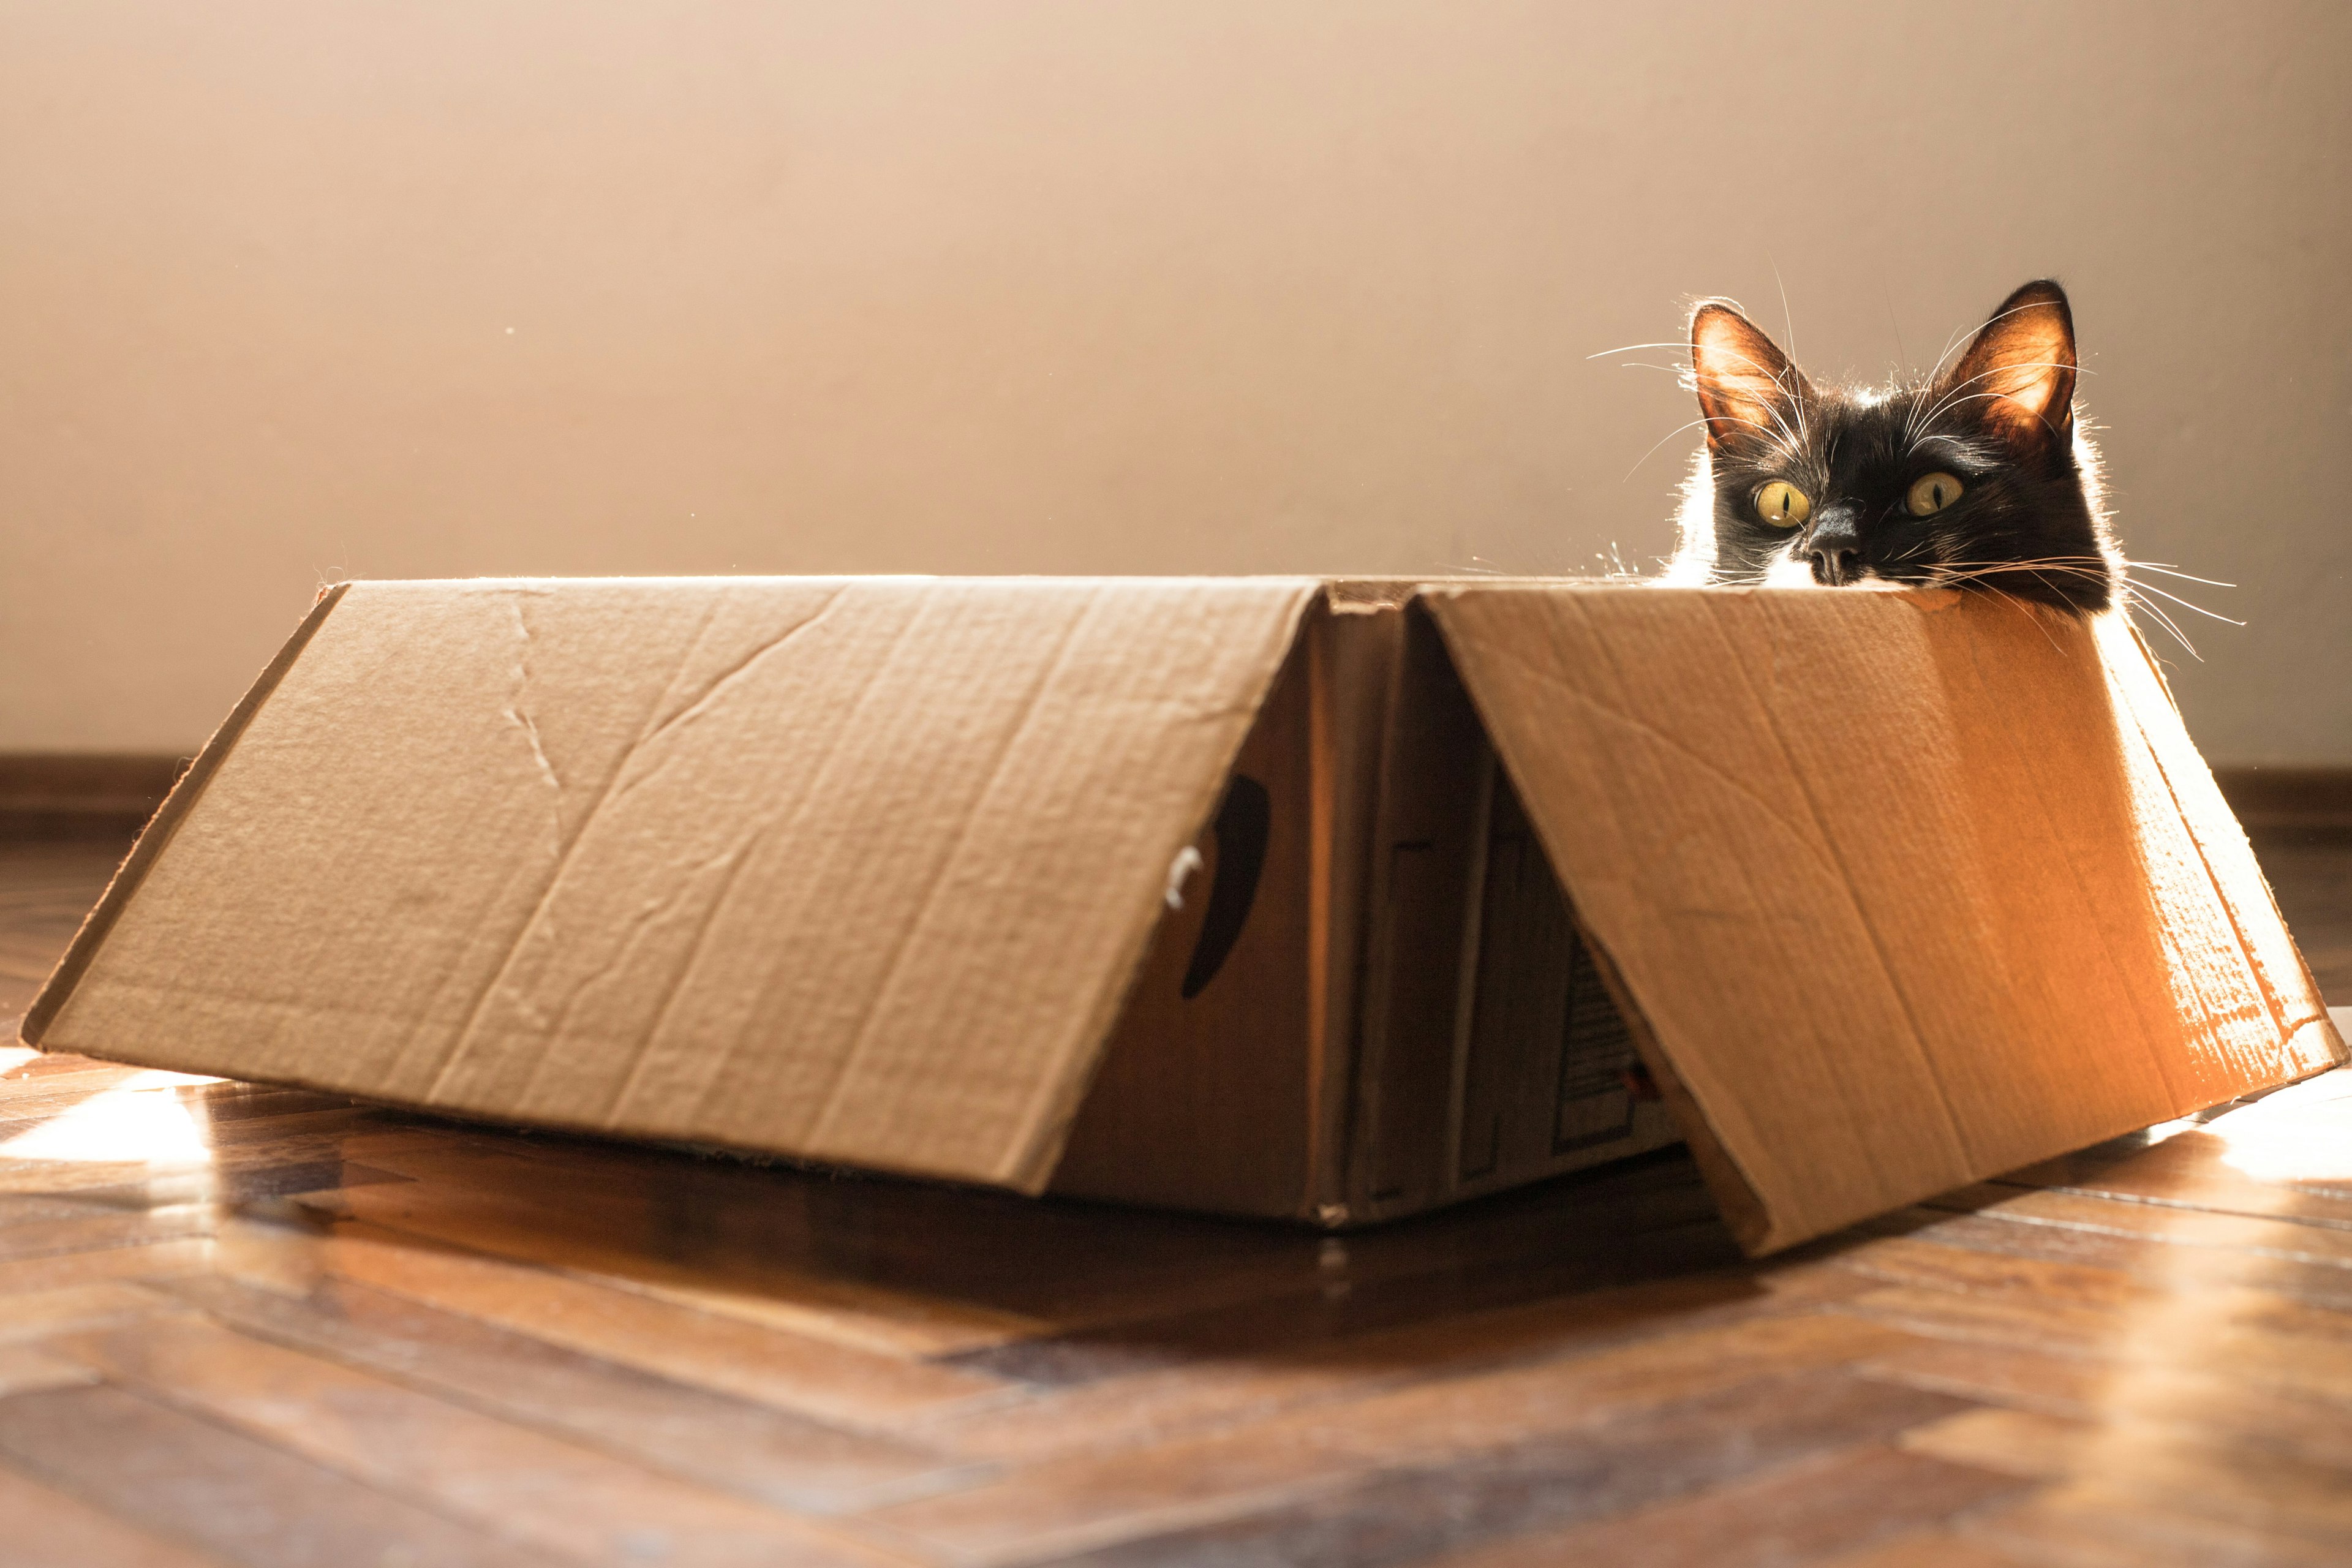 a cat's head peeking out from a cardboard box